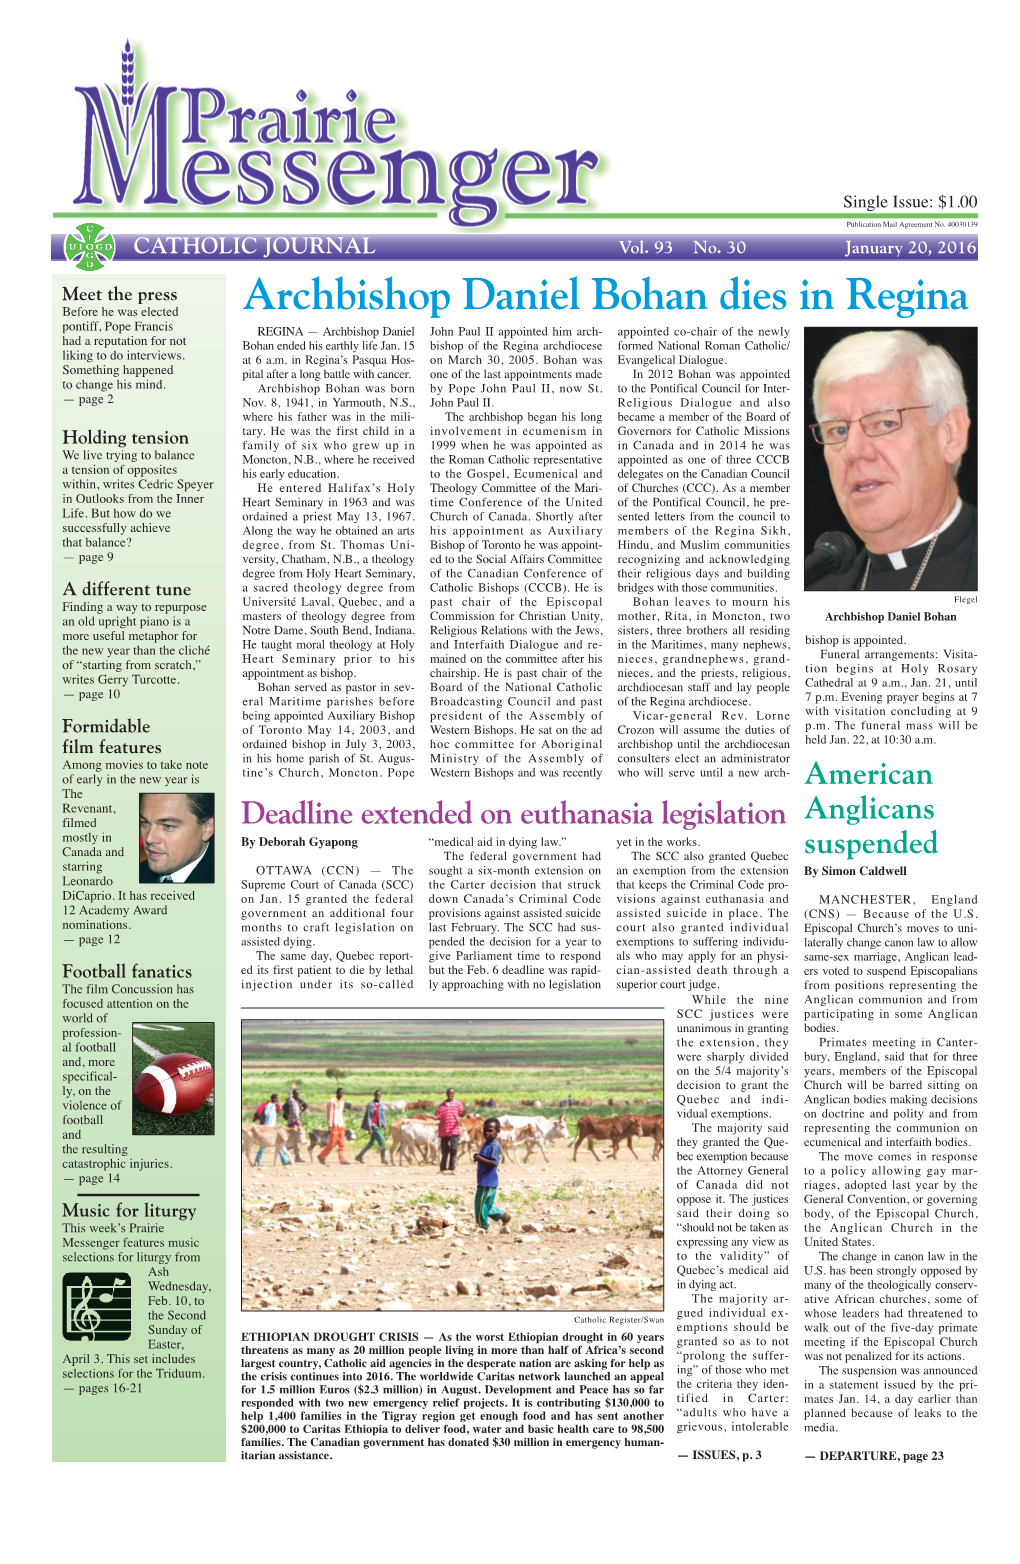 Archbishop Daniel Bohan Dies in Regina